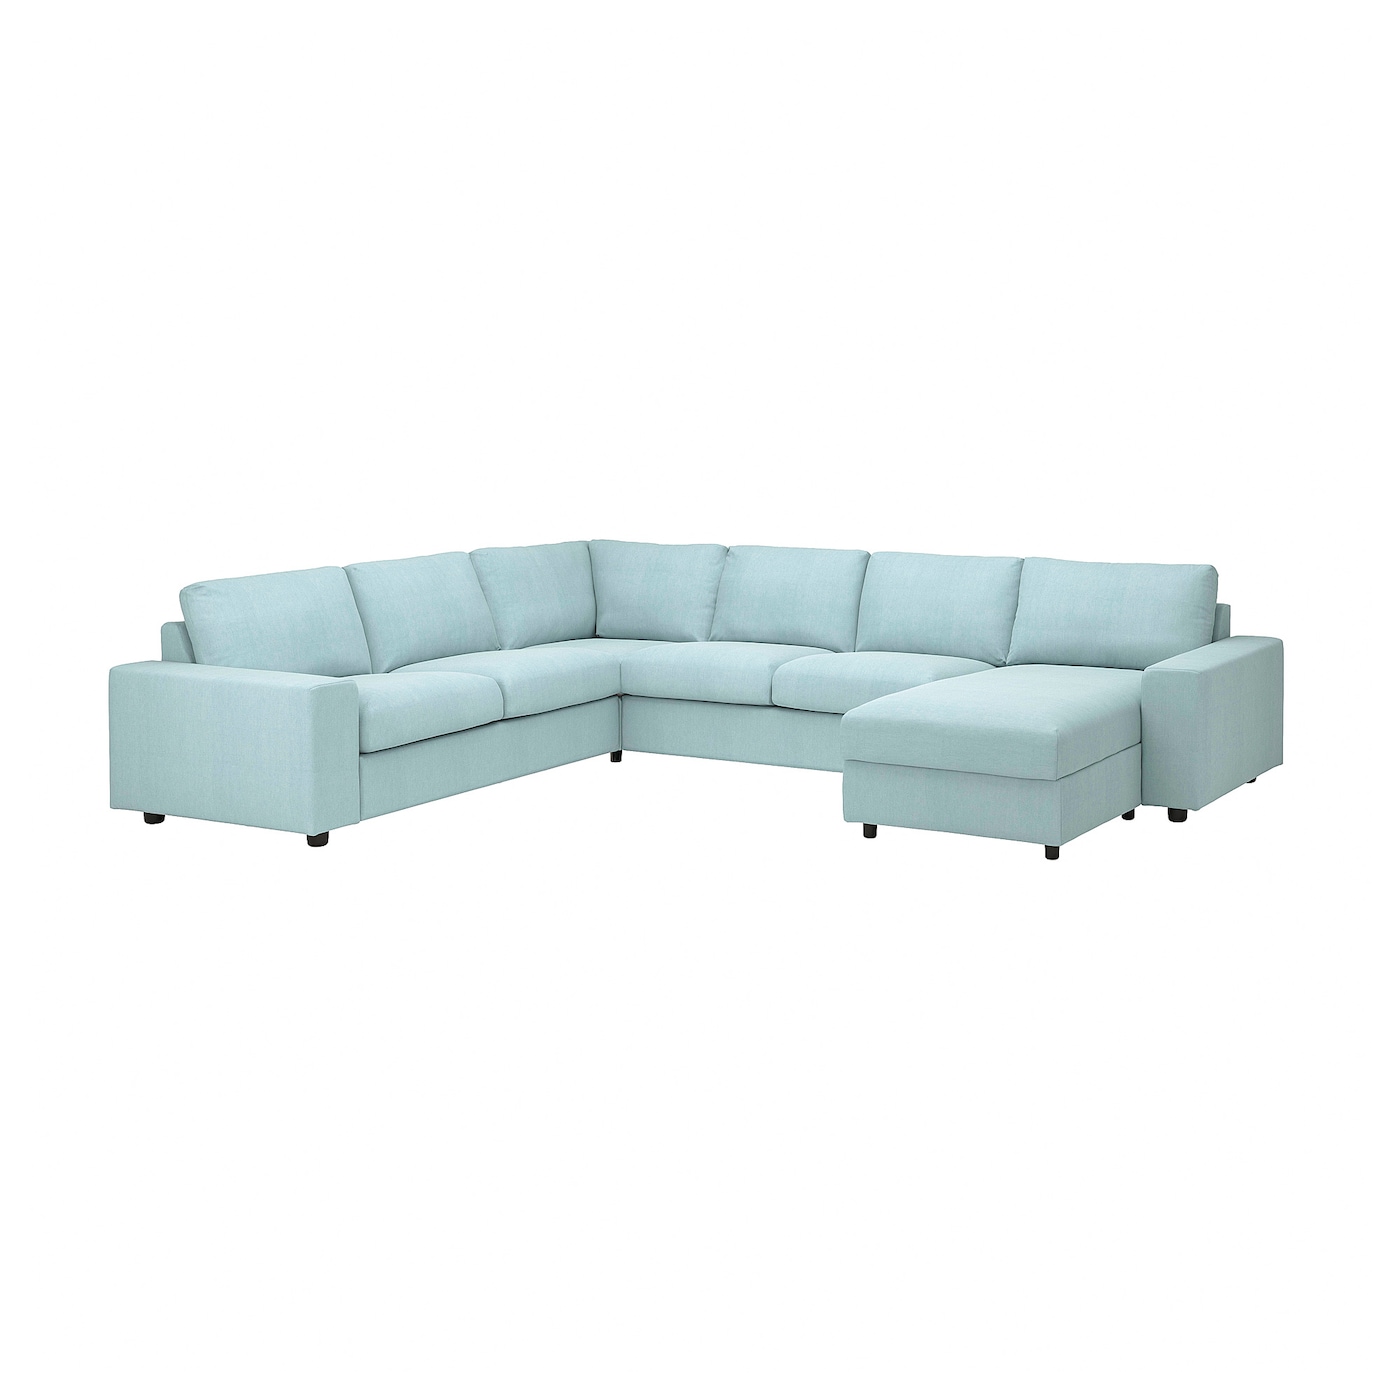 ВИМЛЕ Диван угловой, 5-местный. диван+диван, с широкими подлокотниками/Саксемара светло-синий VIMLE IKEA цена и фото